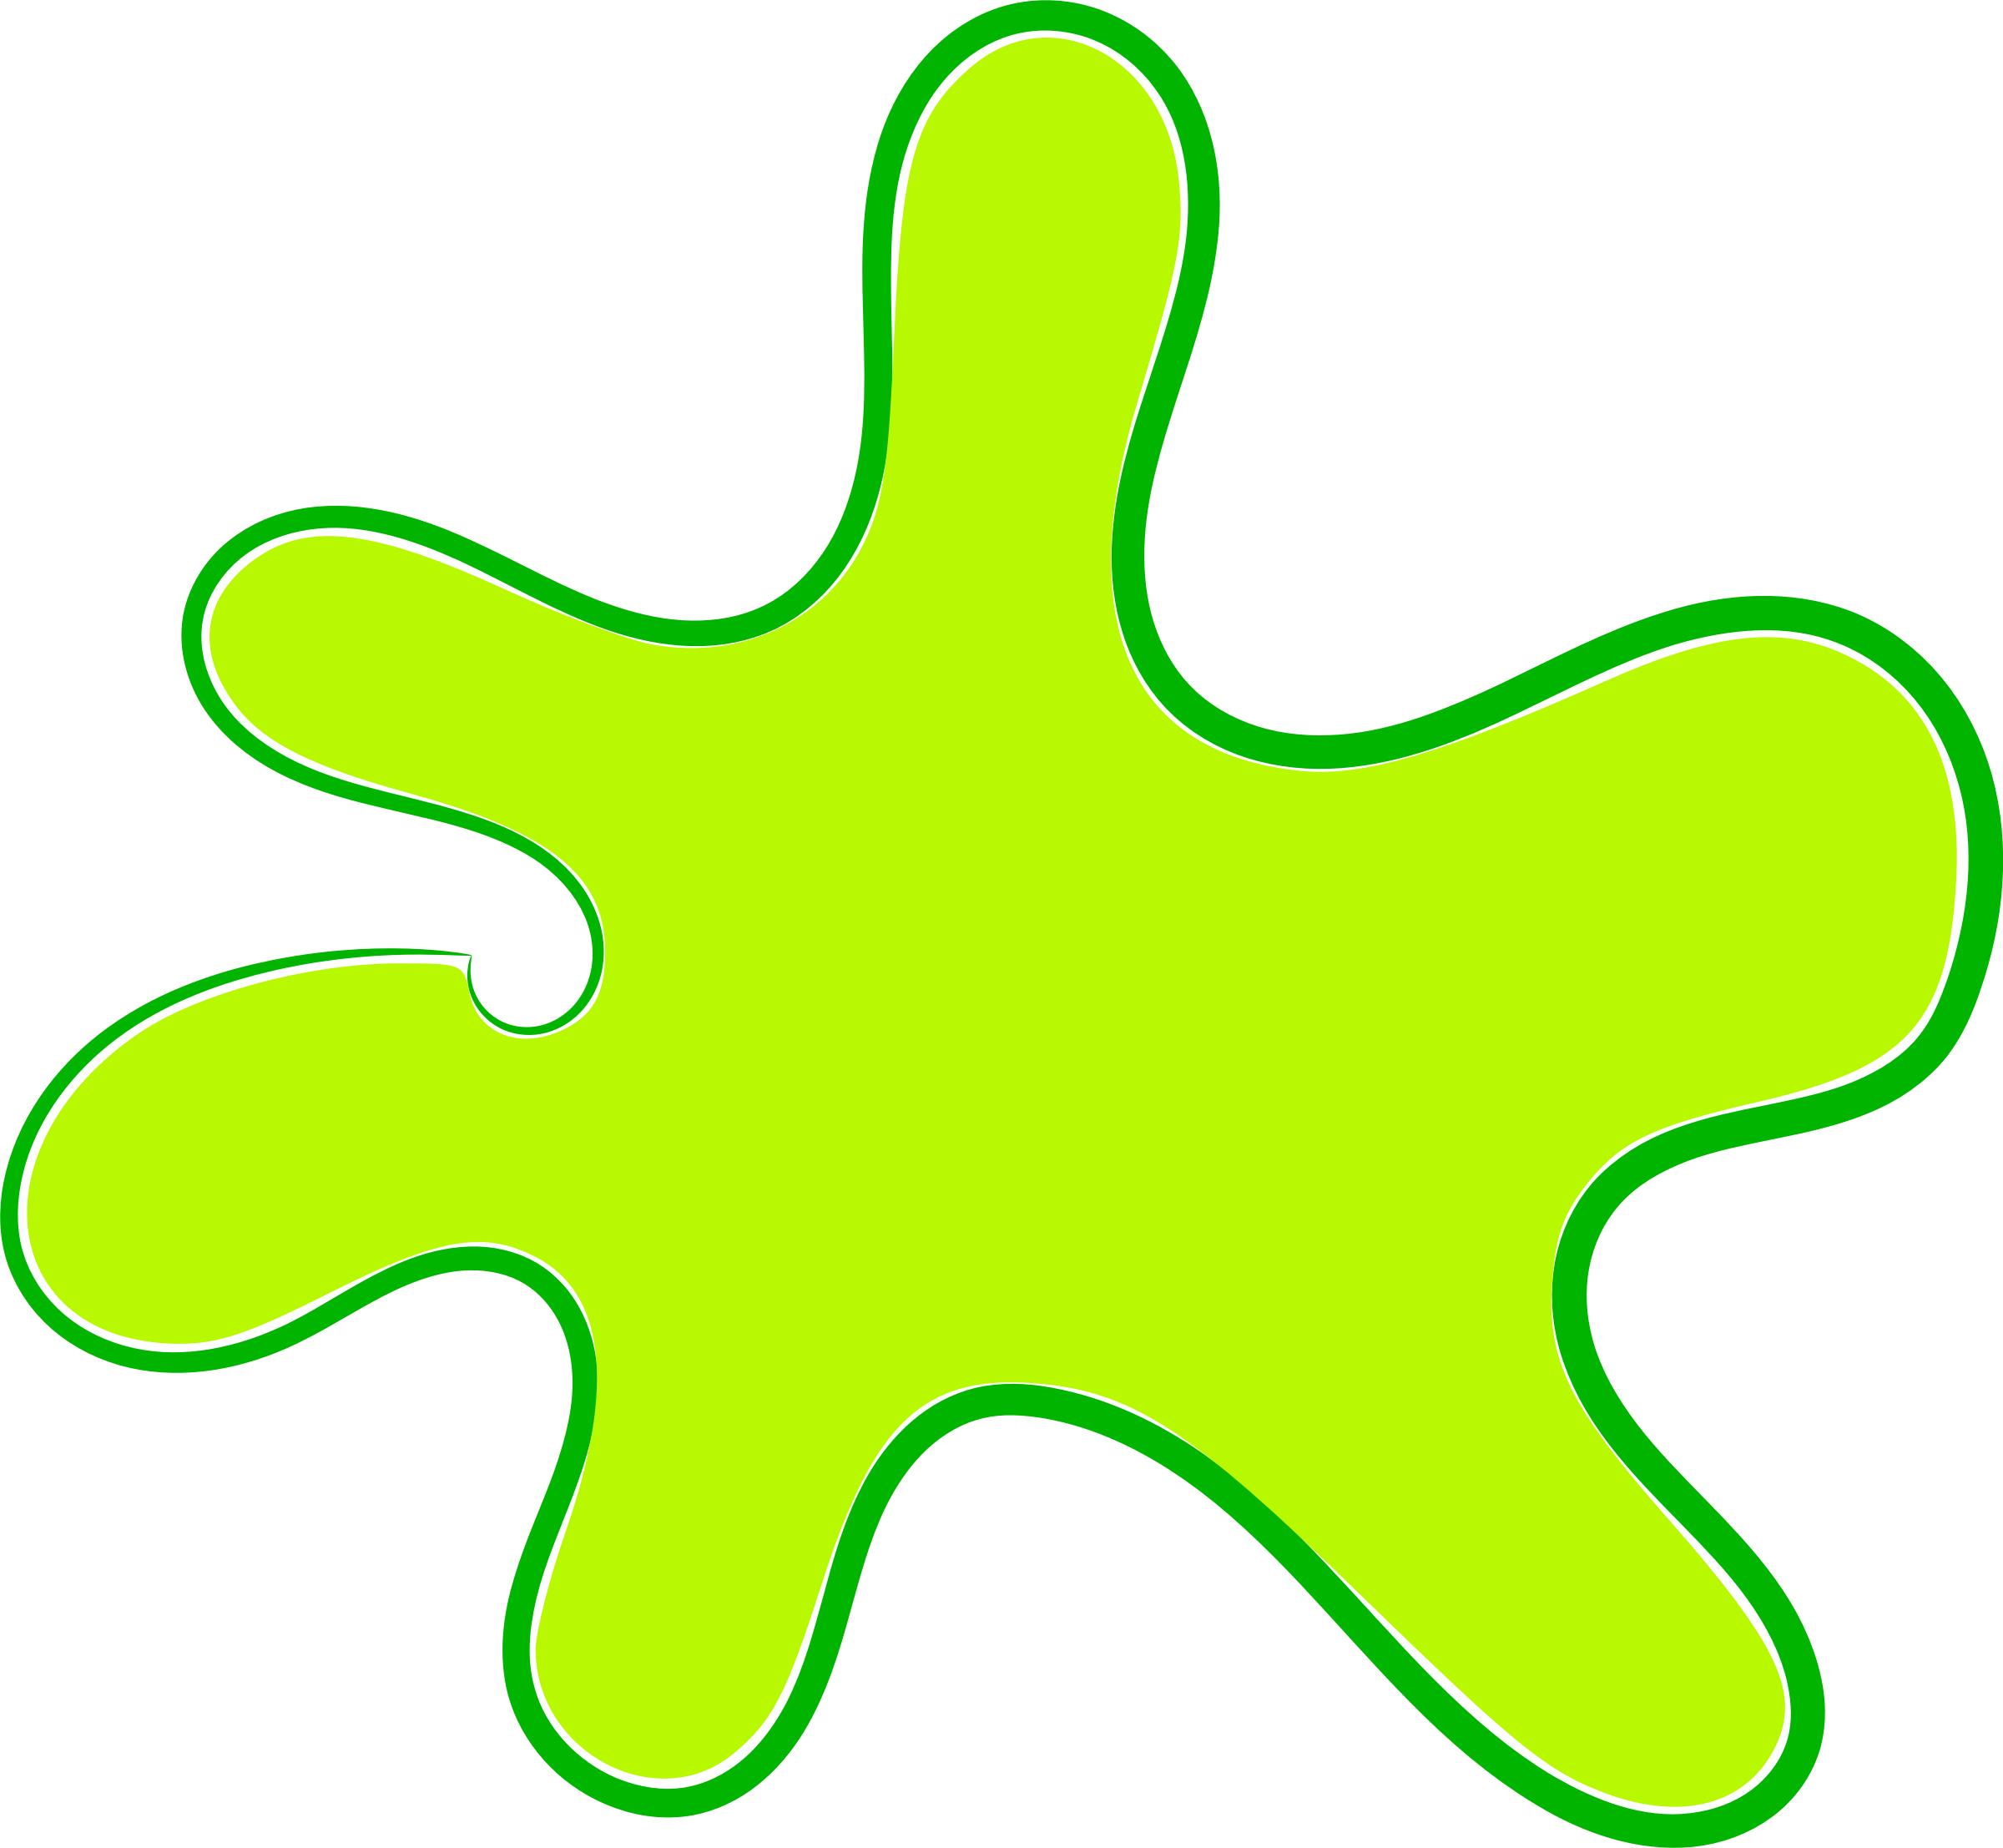 Green splash icons